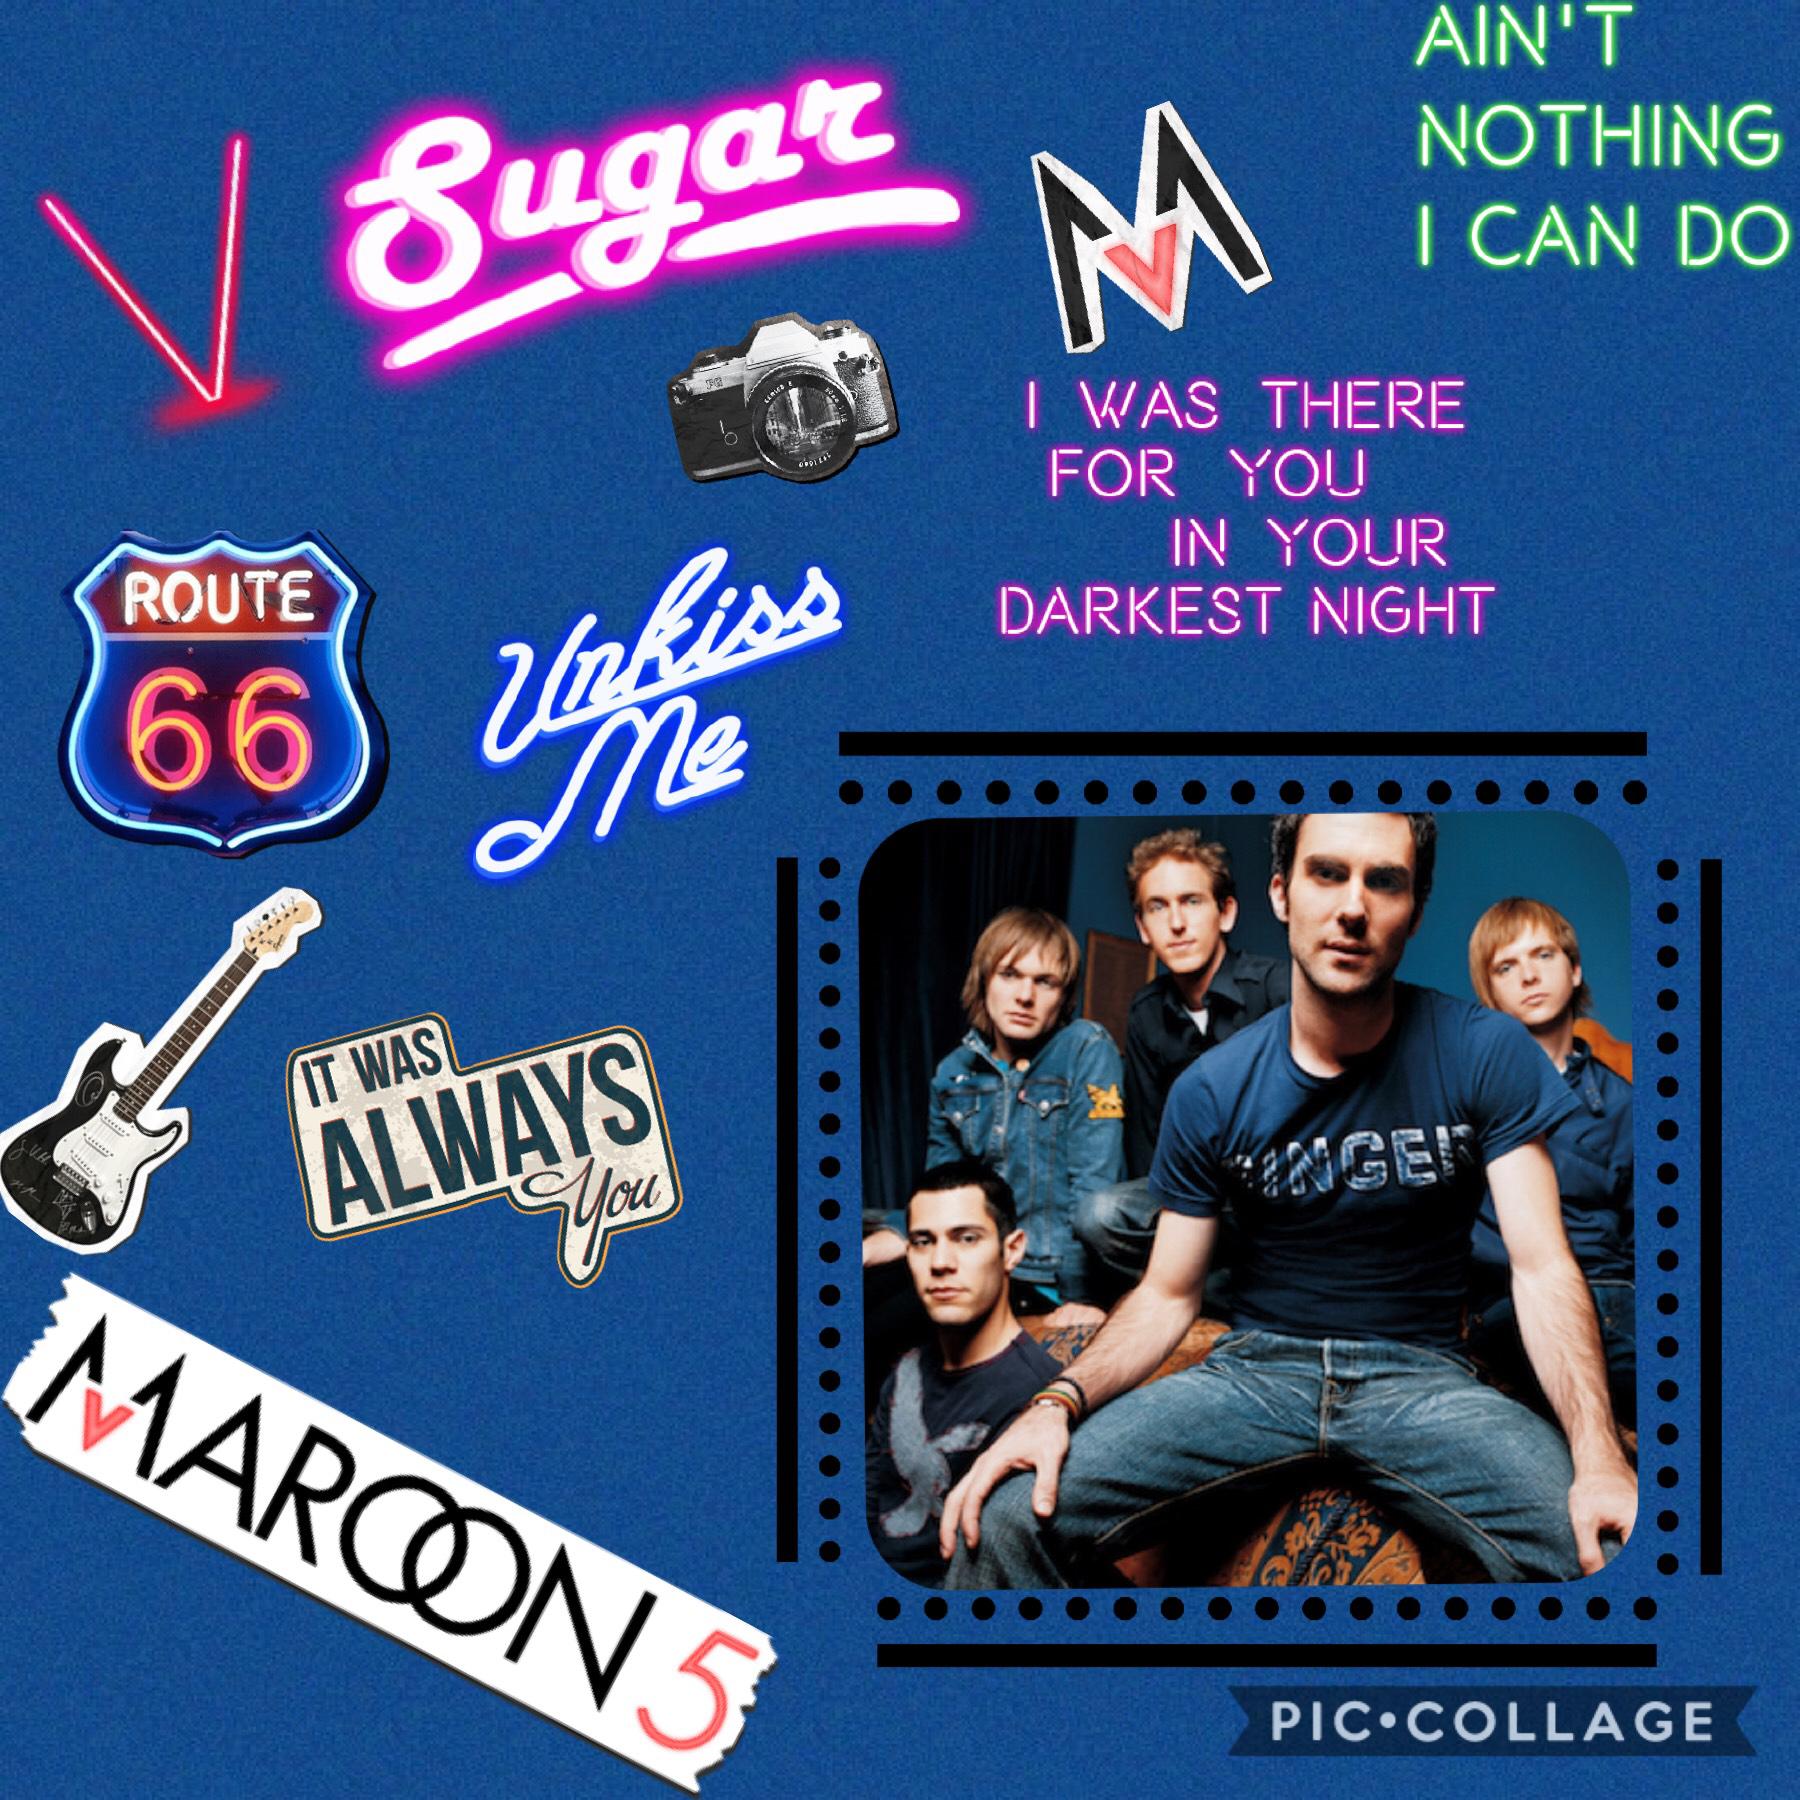 QOTD: Favorite song from Maroon 5?
AOTD: Sugar